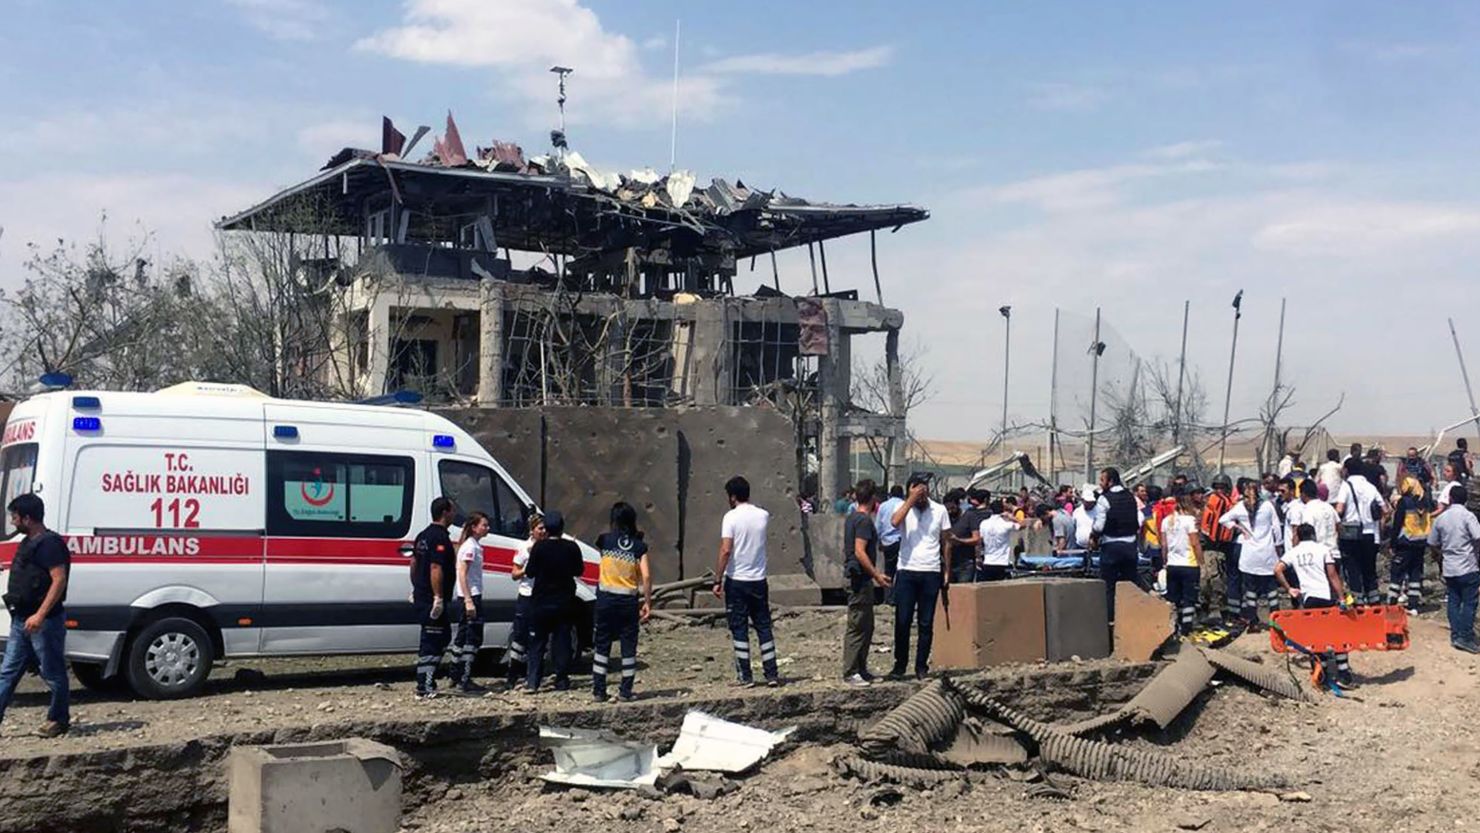 An ambulance arrives at the scene of a vehicle bombing Monday near Diyarbakir, Turkey.